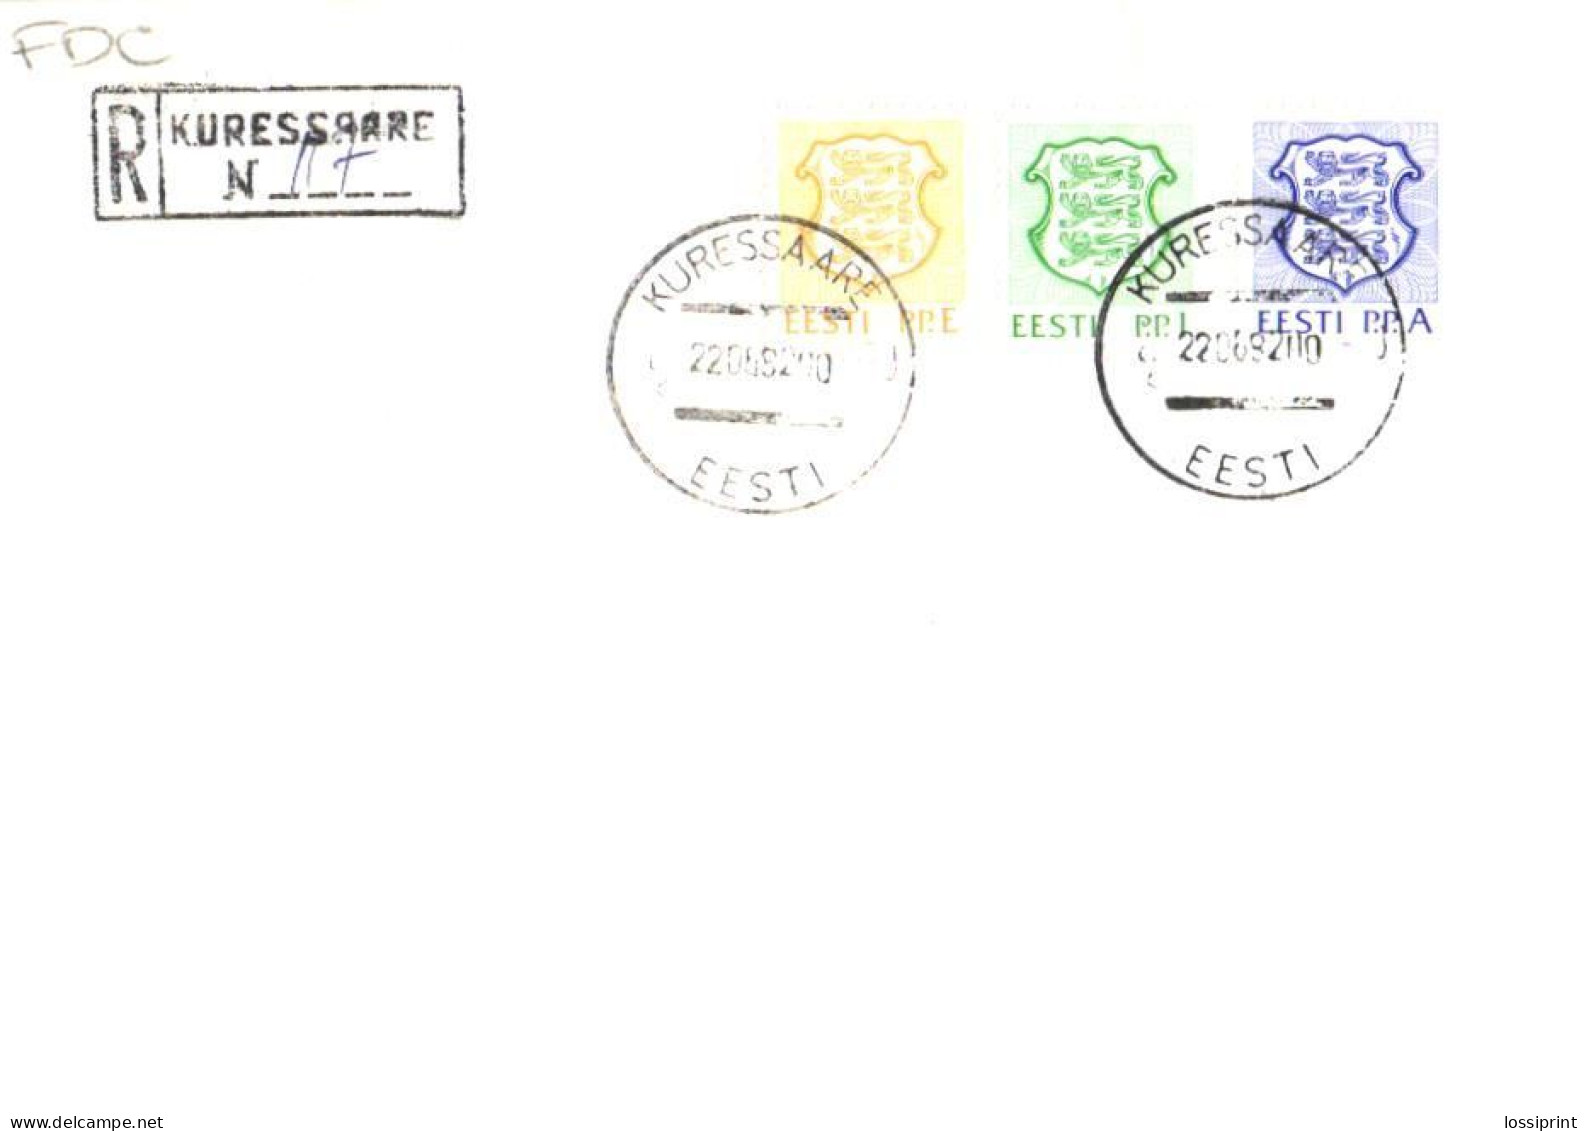 Estonia:FDC, P.P.E , P.P.I And P.P.A Stamps With Kuressaare Registered Cancellation, 1992 - Estland